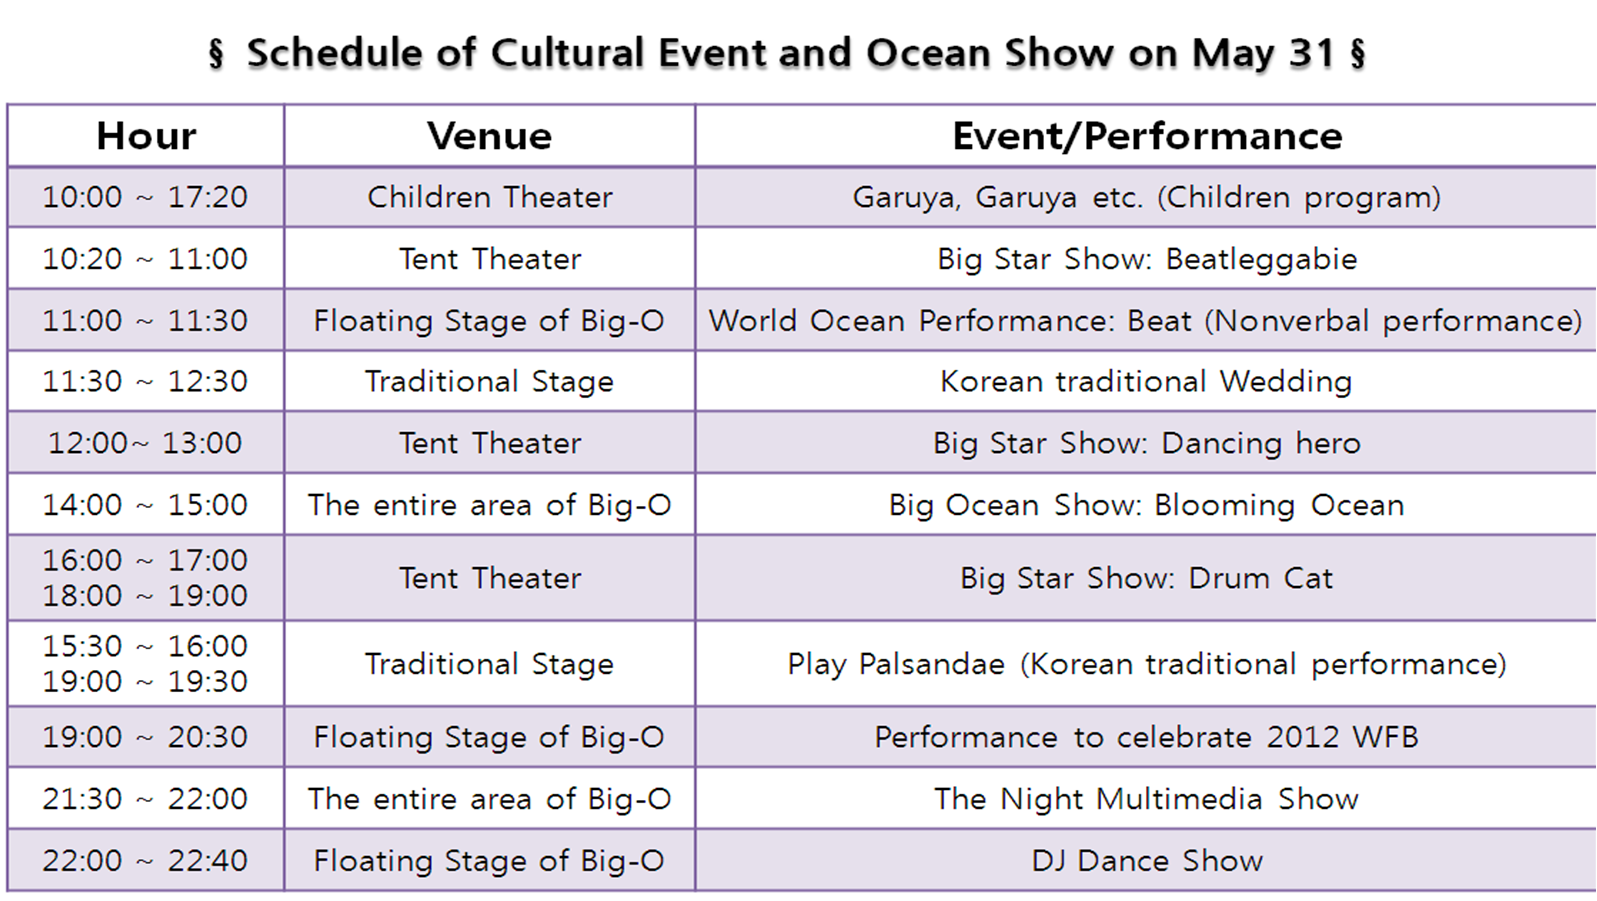 Scheduled events